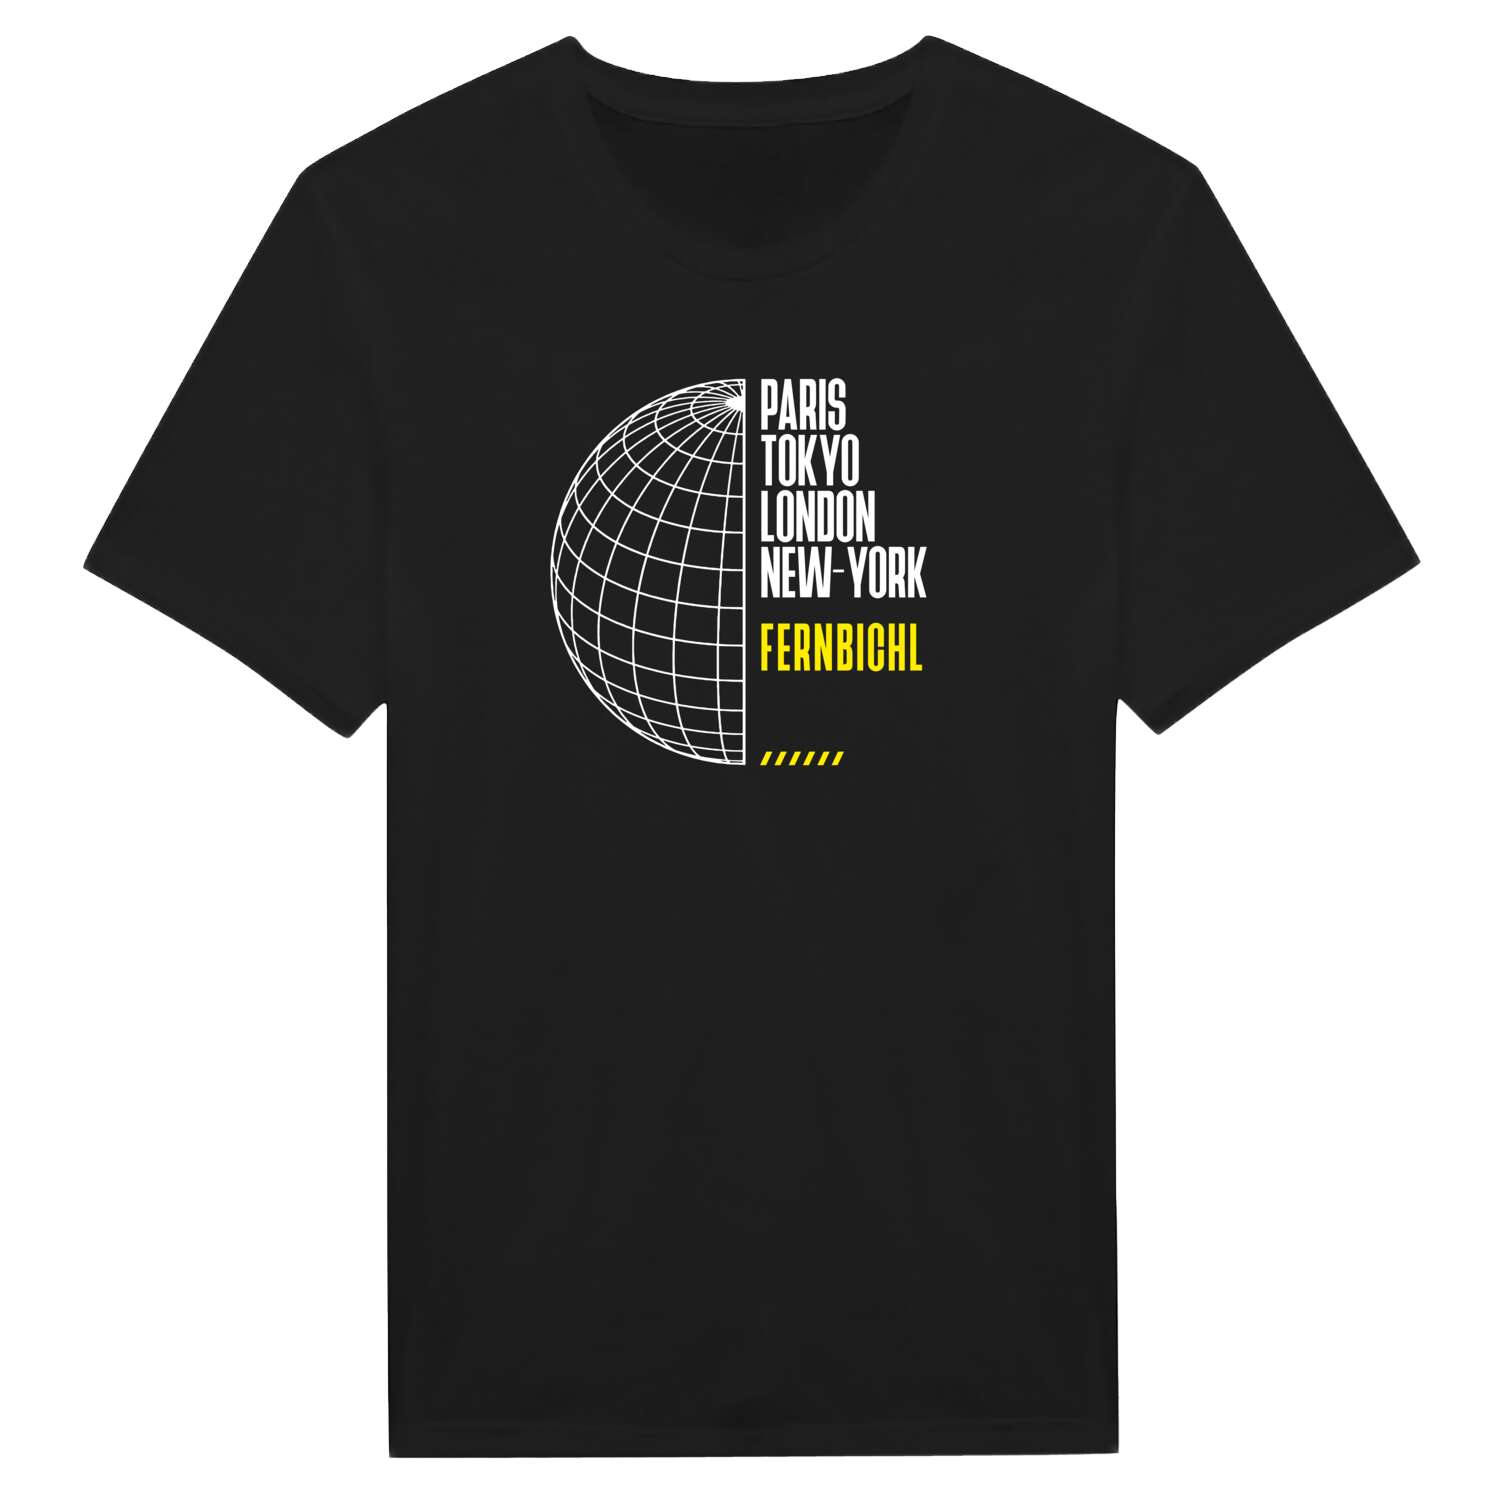 Fernbichl T-Shirt »Paris Tokyo London«